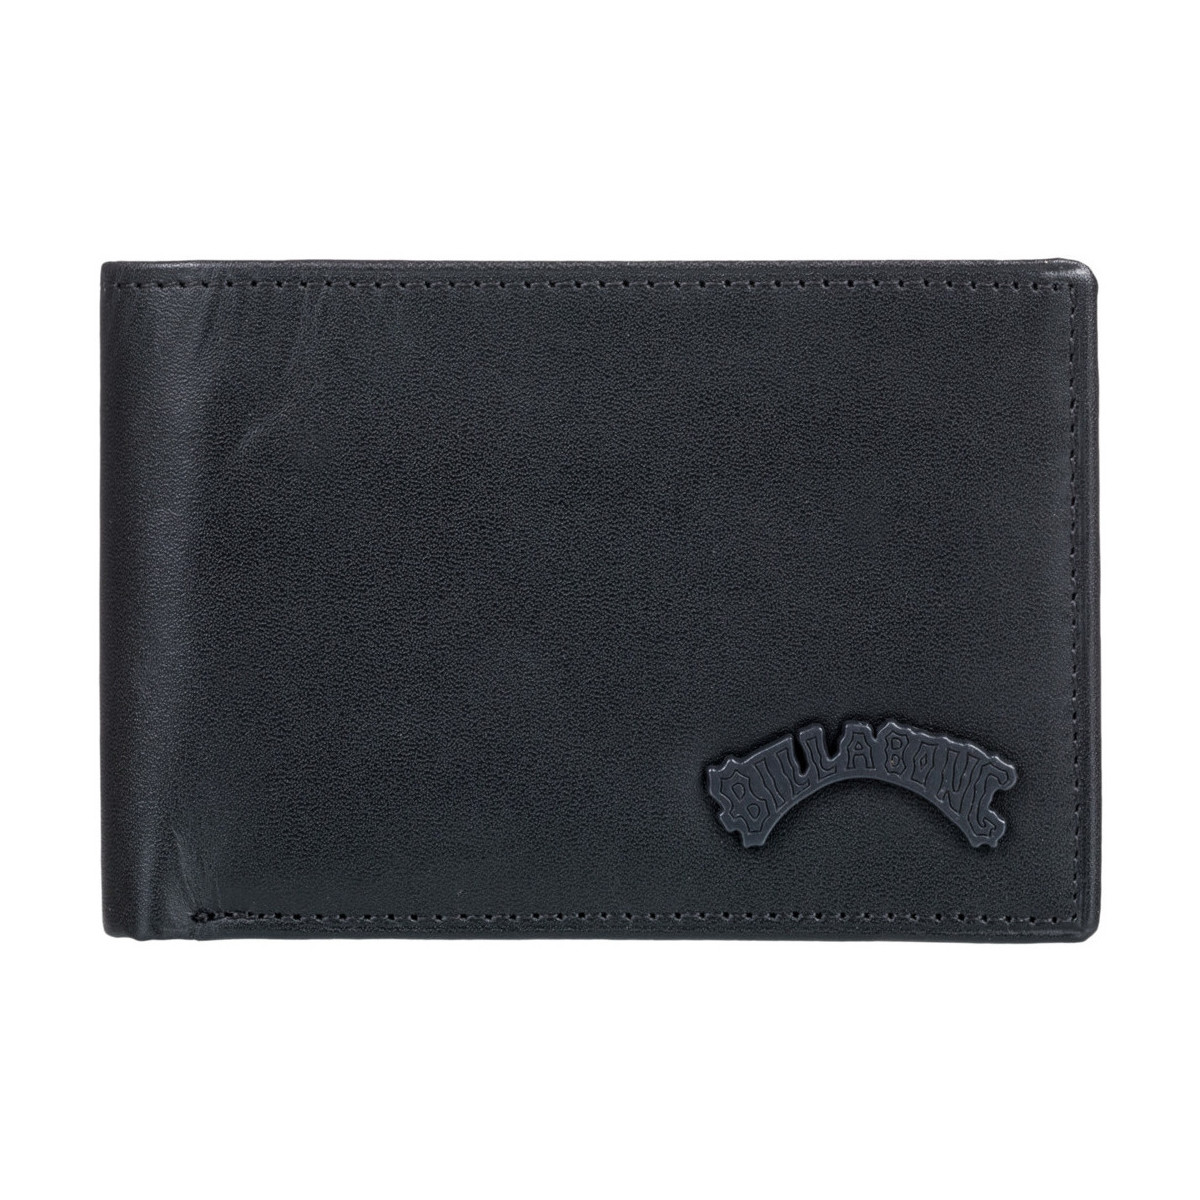 Billabong Noir Arch Leather A1z09yFI